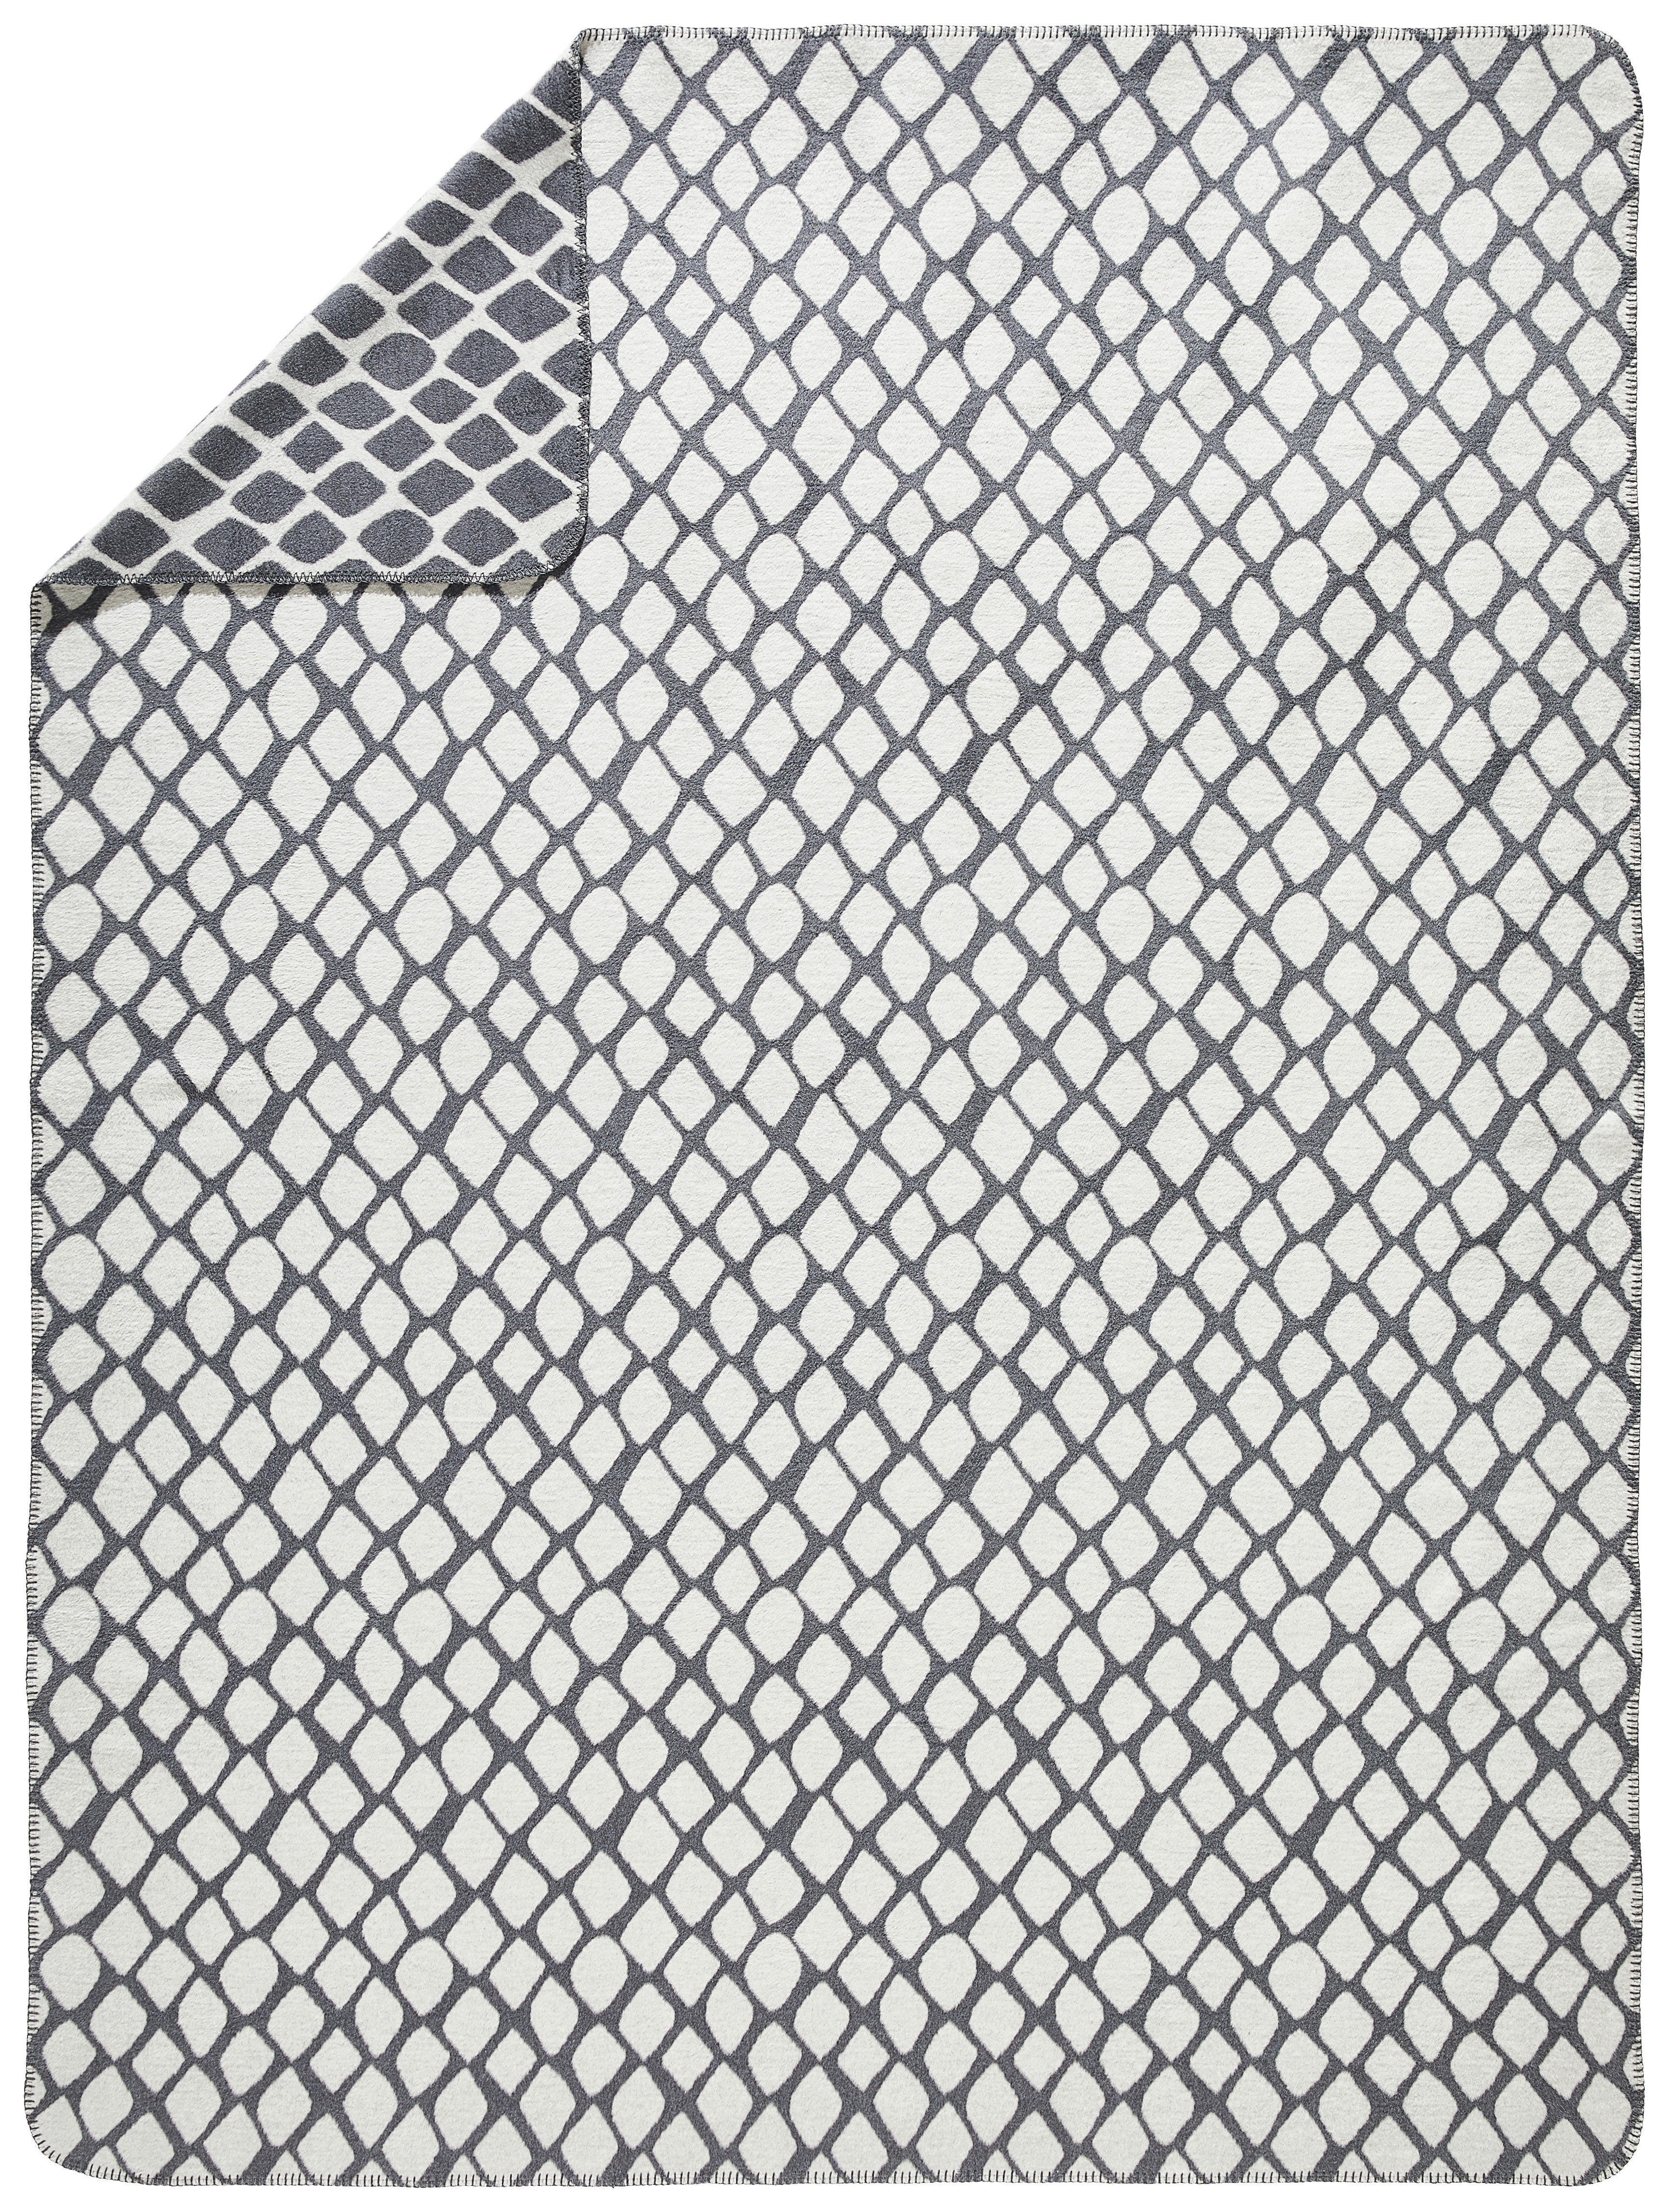 WOHNDECKE Snako 150/200 cm  - Anthrazit, LIFESTYLE, Textil (150/200cm) - Dieter Knoll